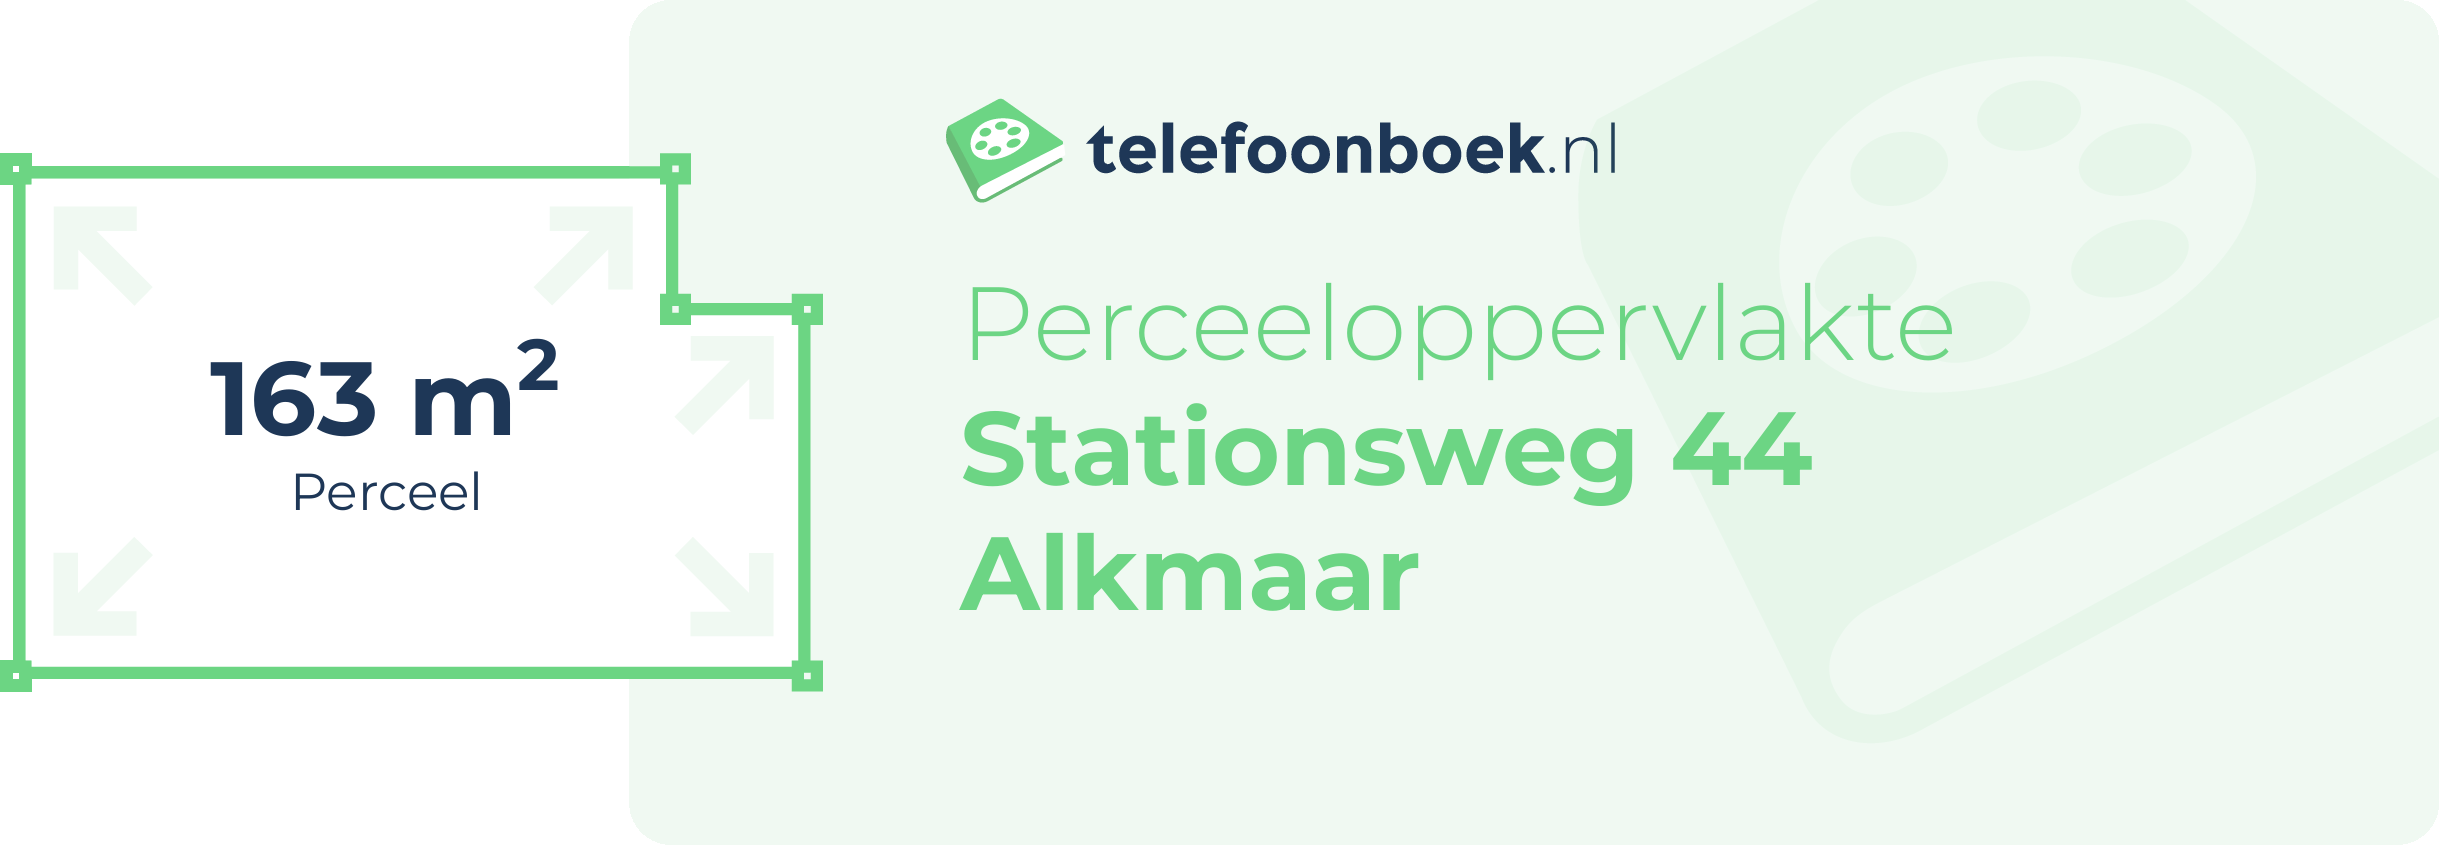 Perceeloppervlakte Stationsweg 44 Alkmaar